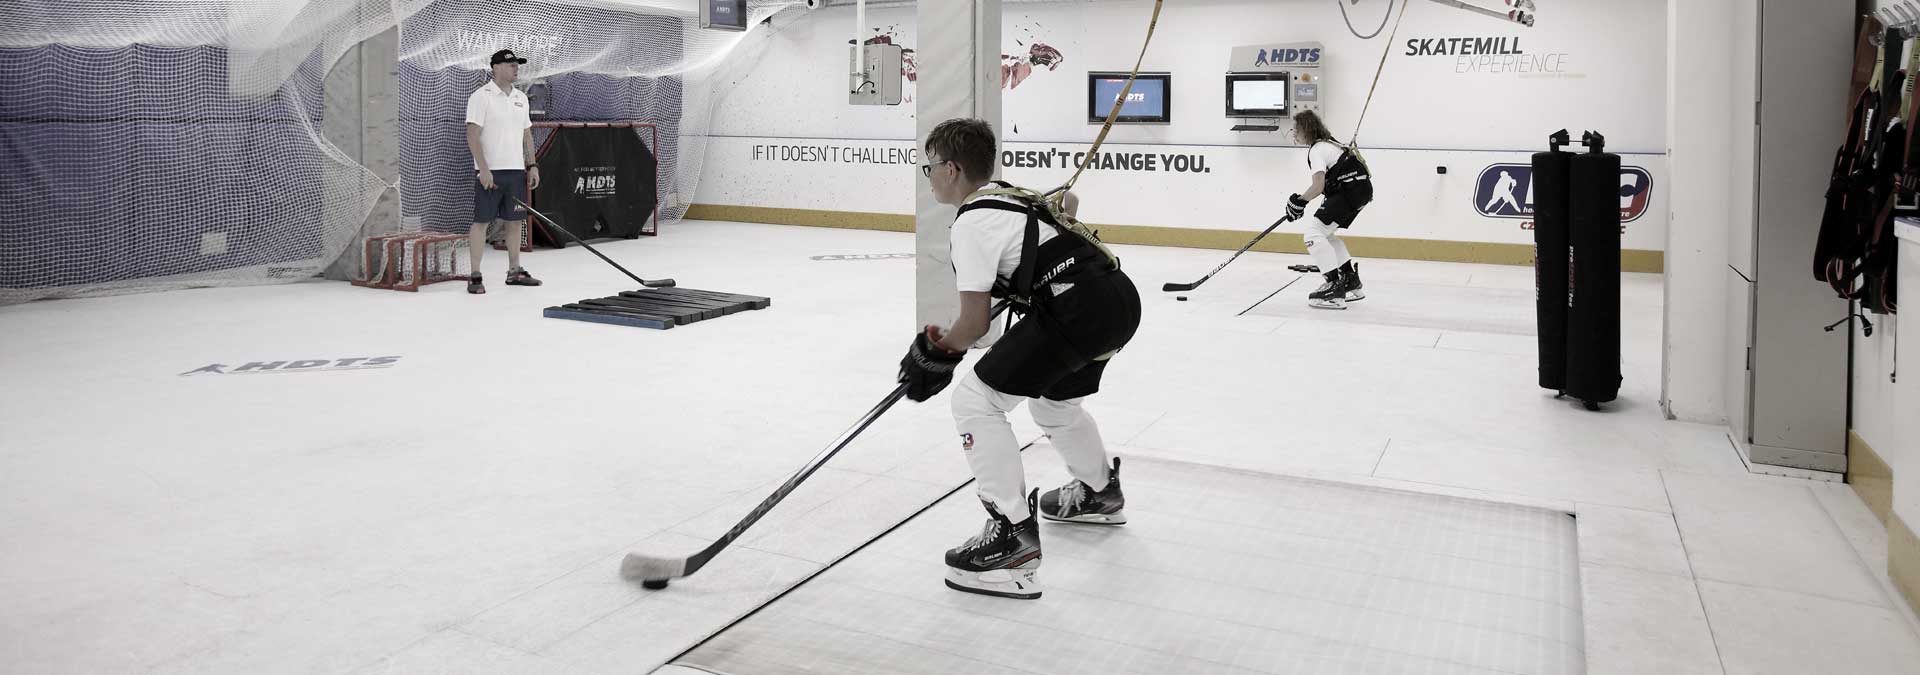 hockey treadmill video